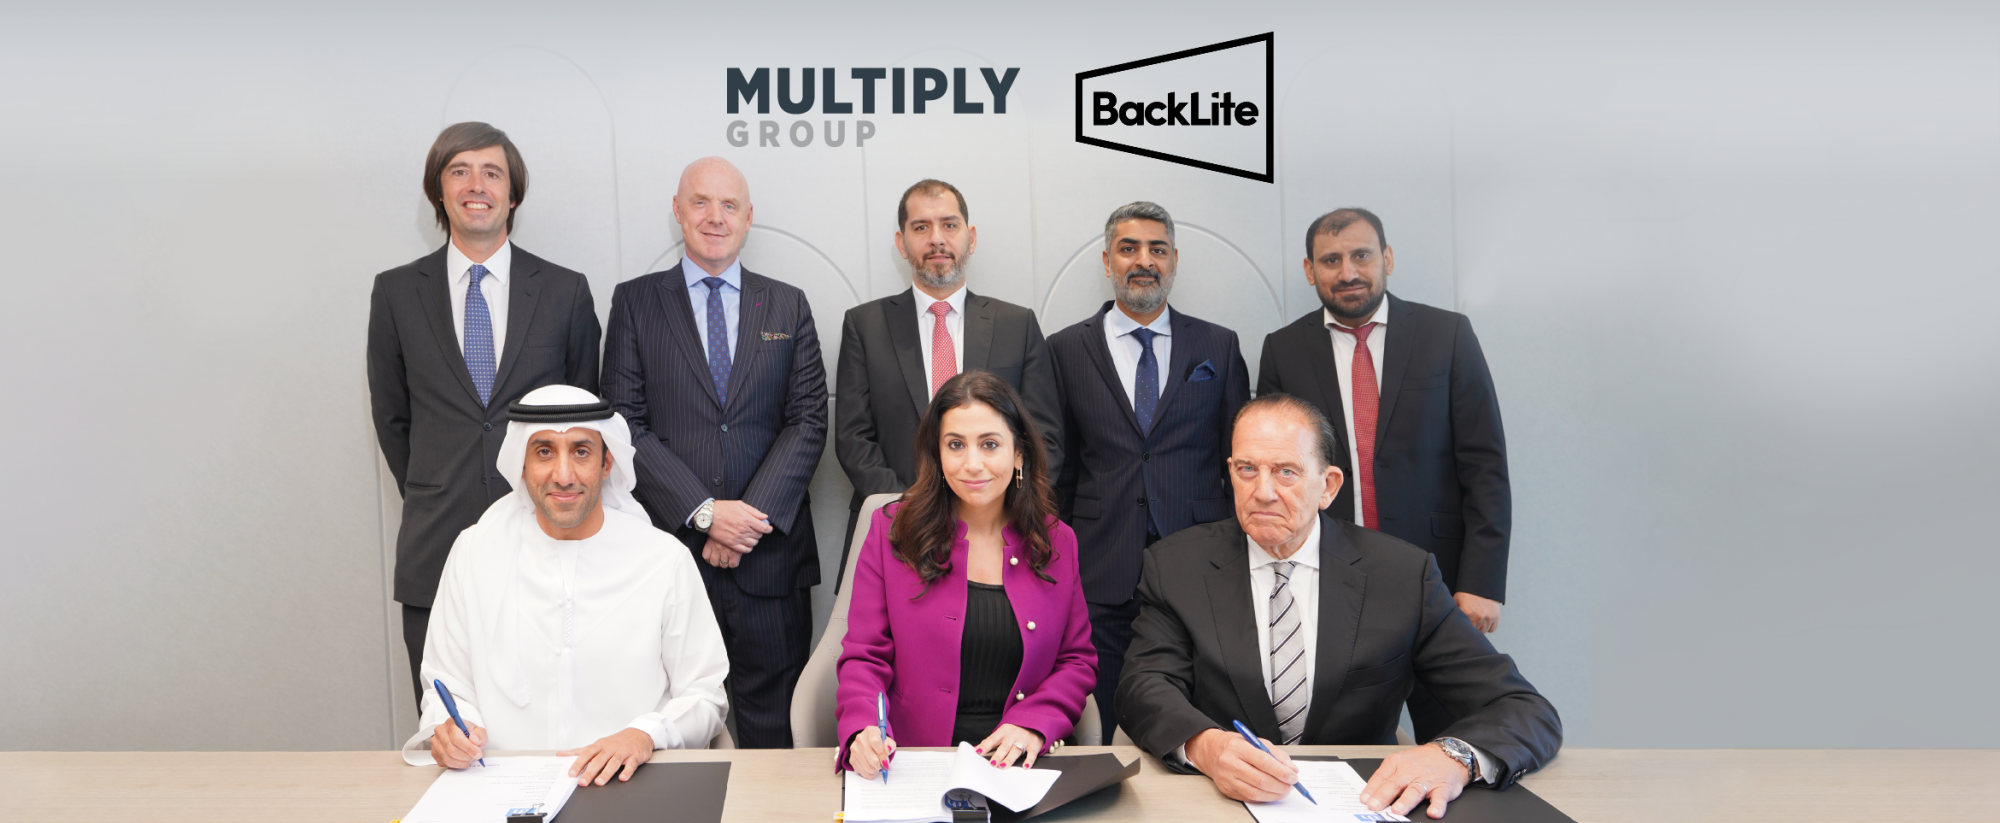 Multiply Group Fully Acquires BackLite Media; Strengthens its Media Portfolio